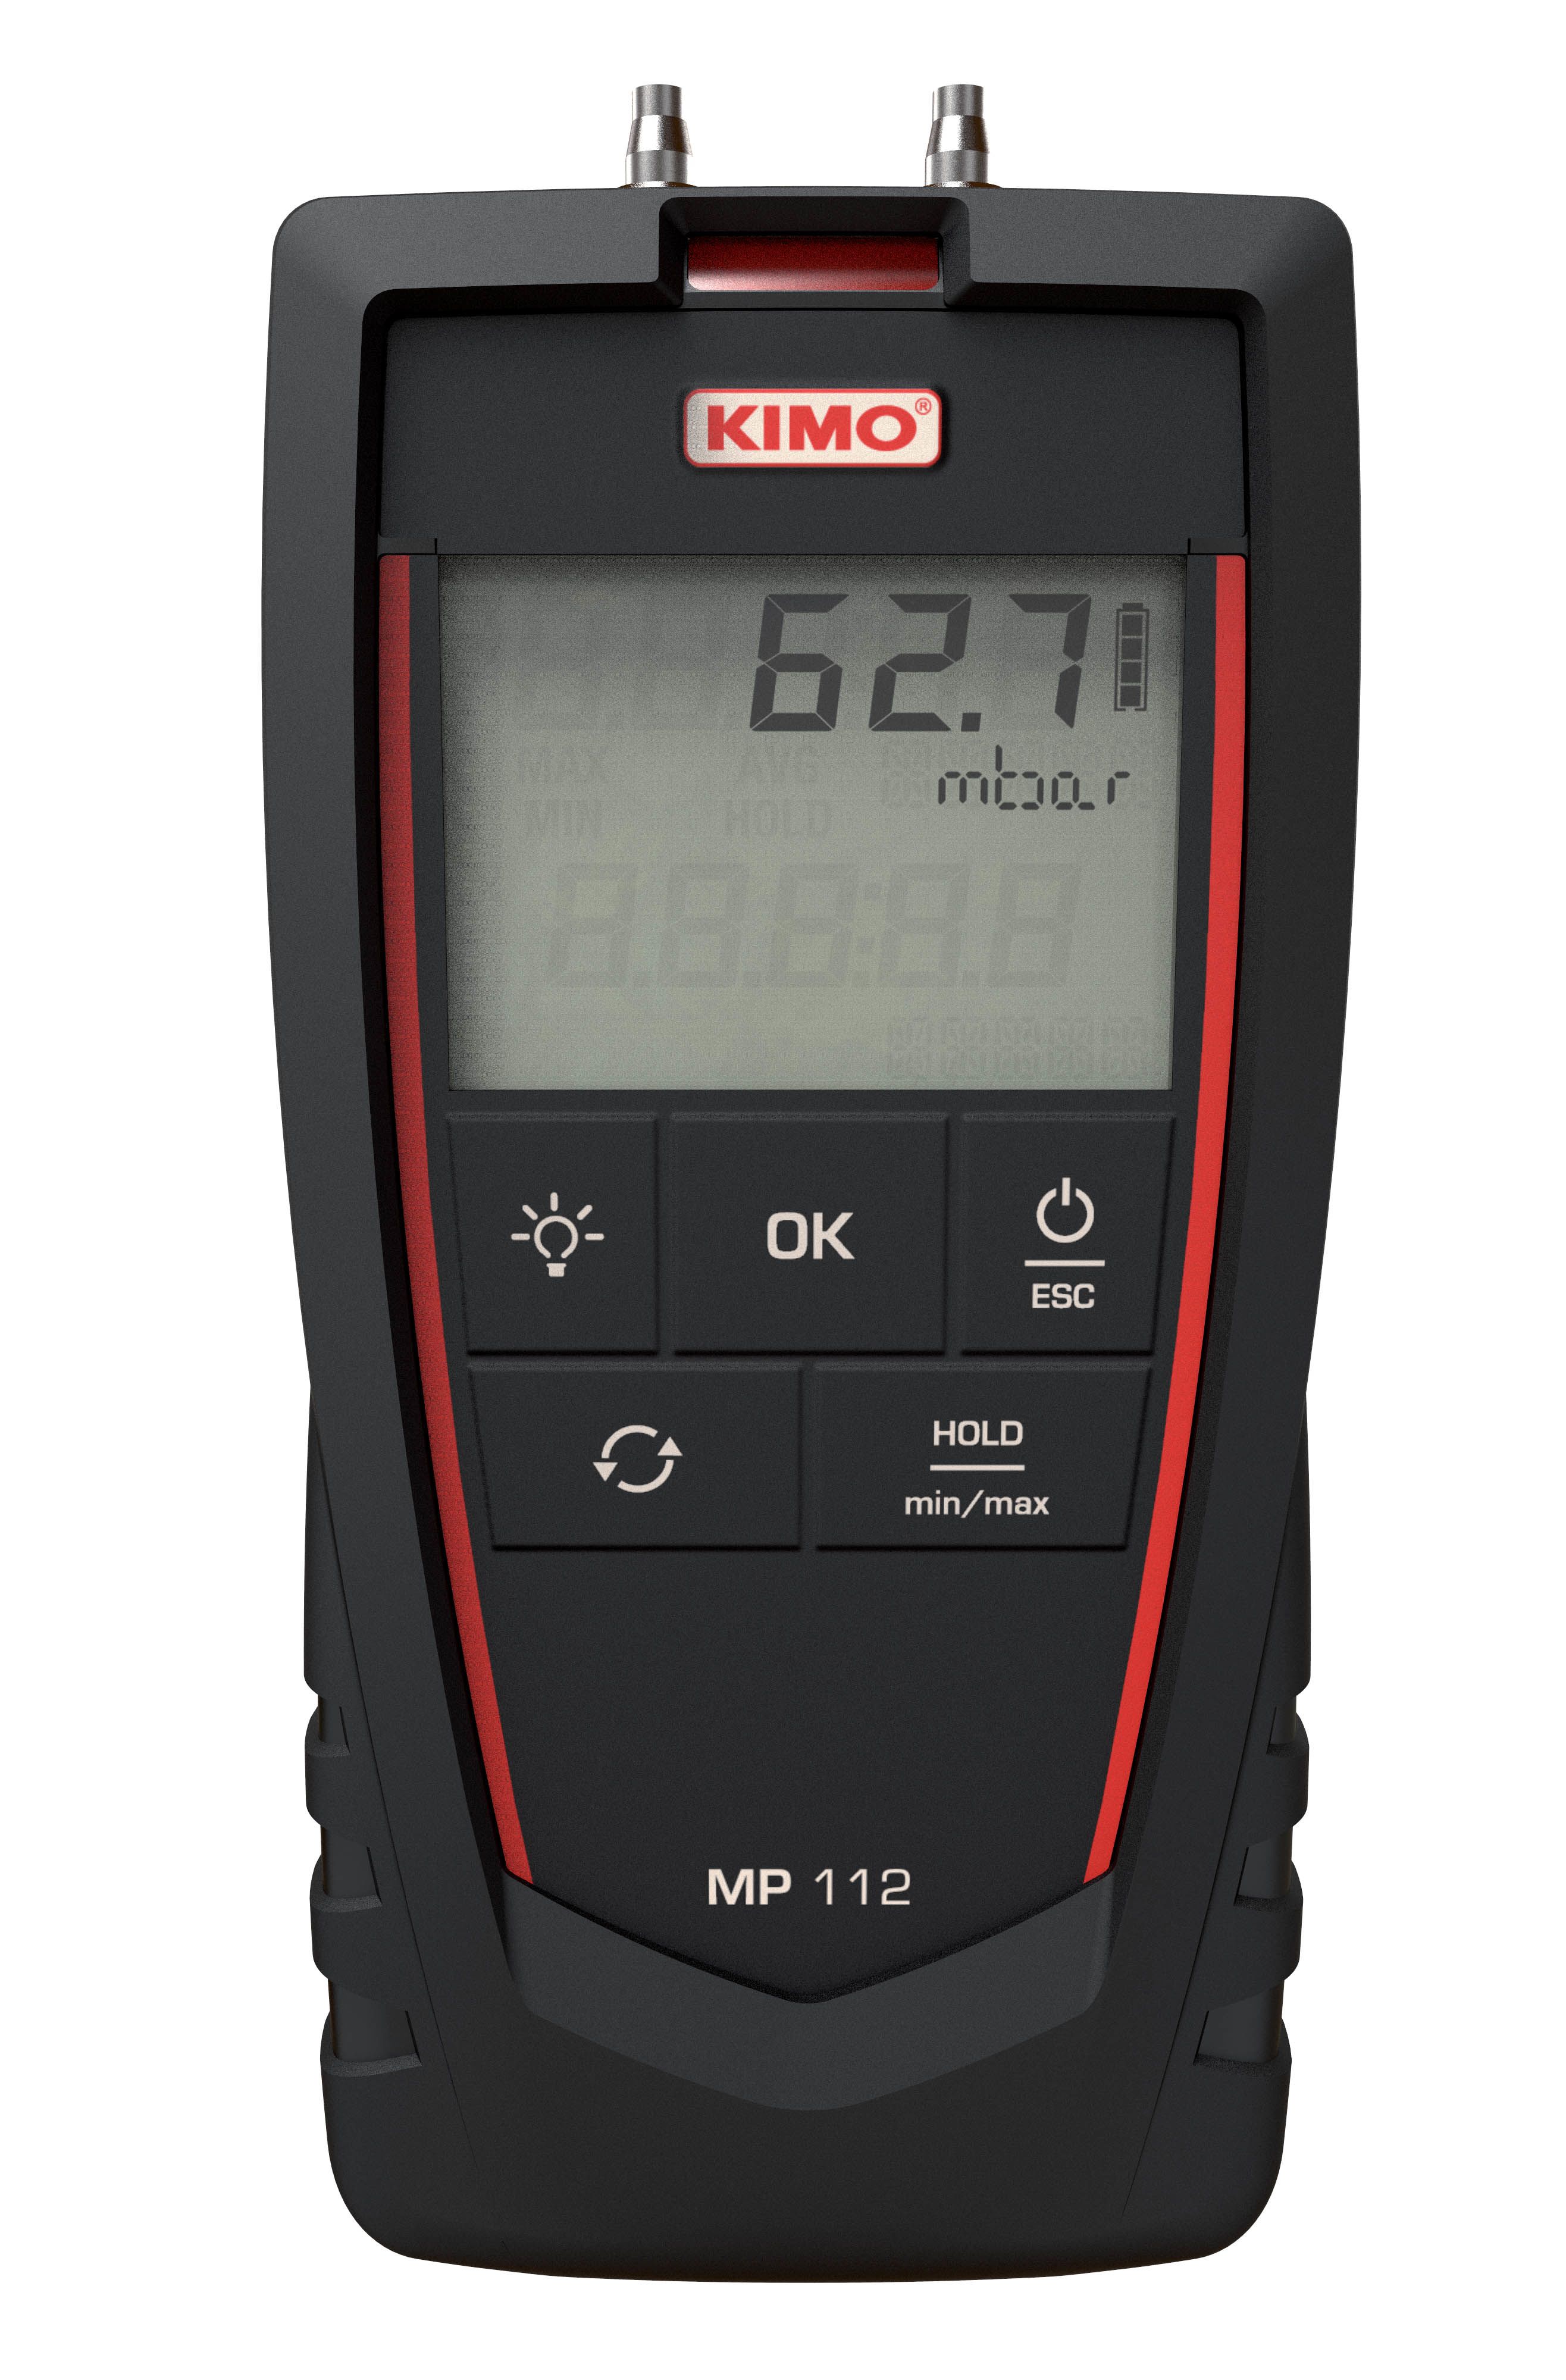 KIMO Differential Manometer With 2 Pressure Port/s, Max Pressure Measurement 2000mbar